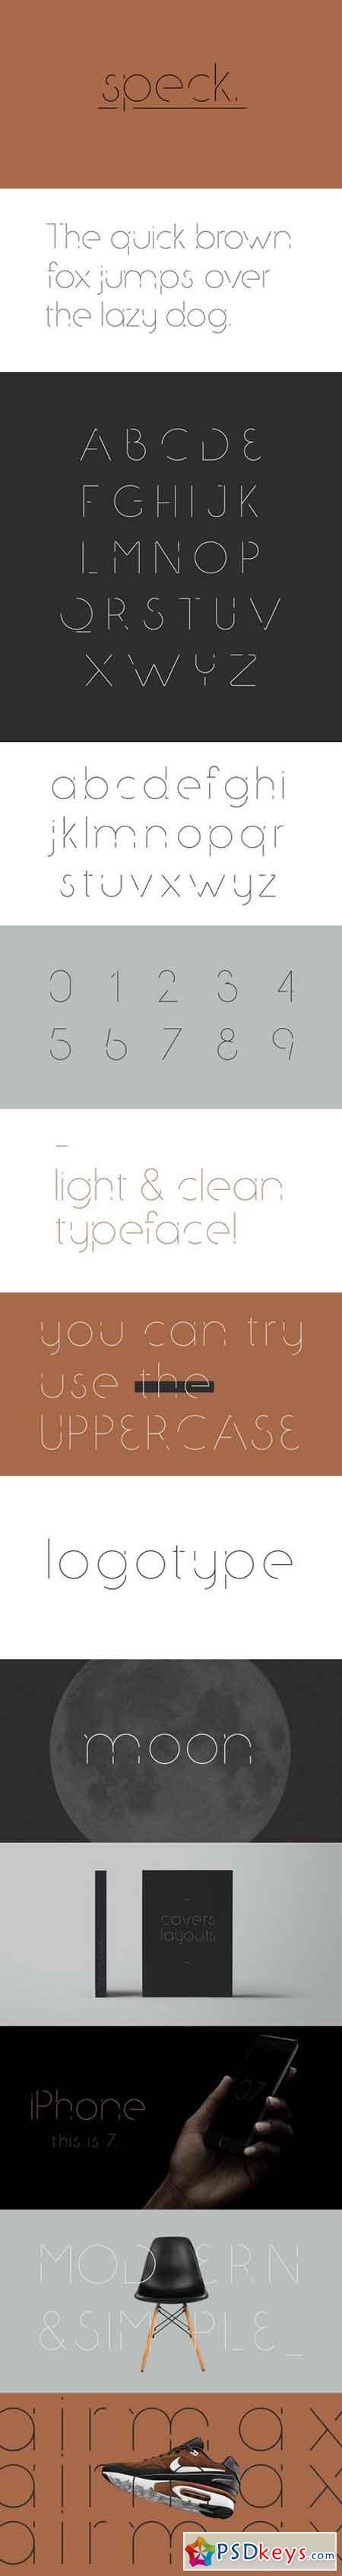 Speck Display - Typeface